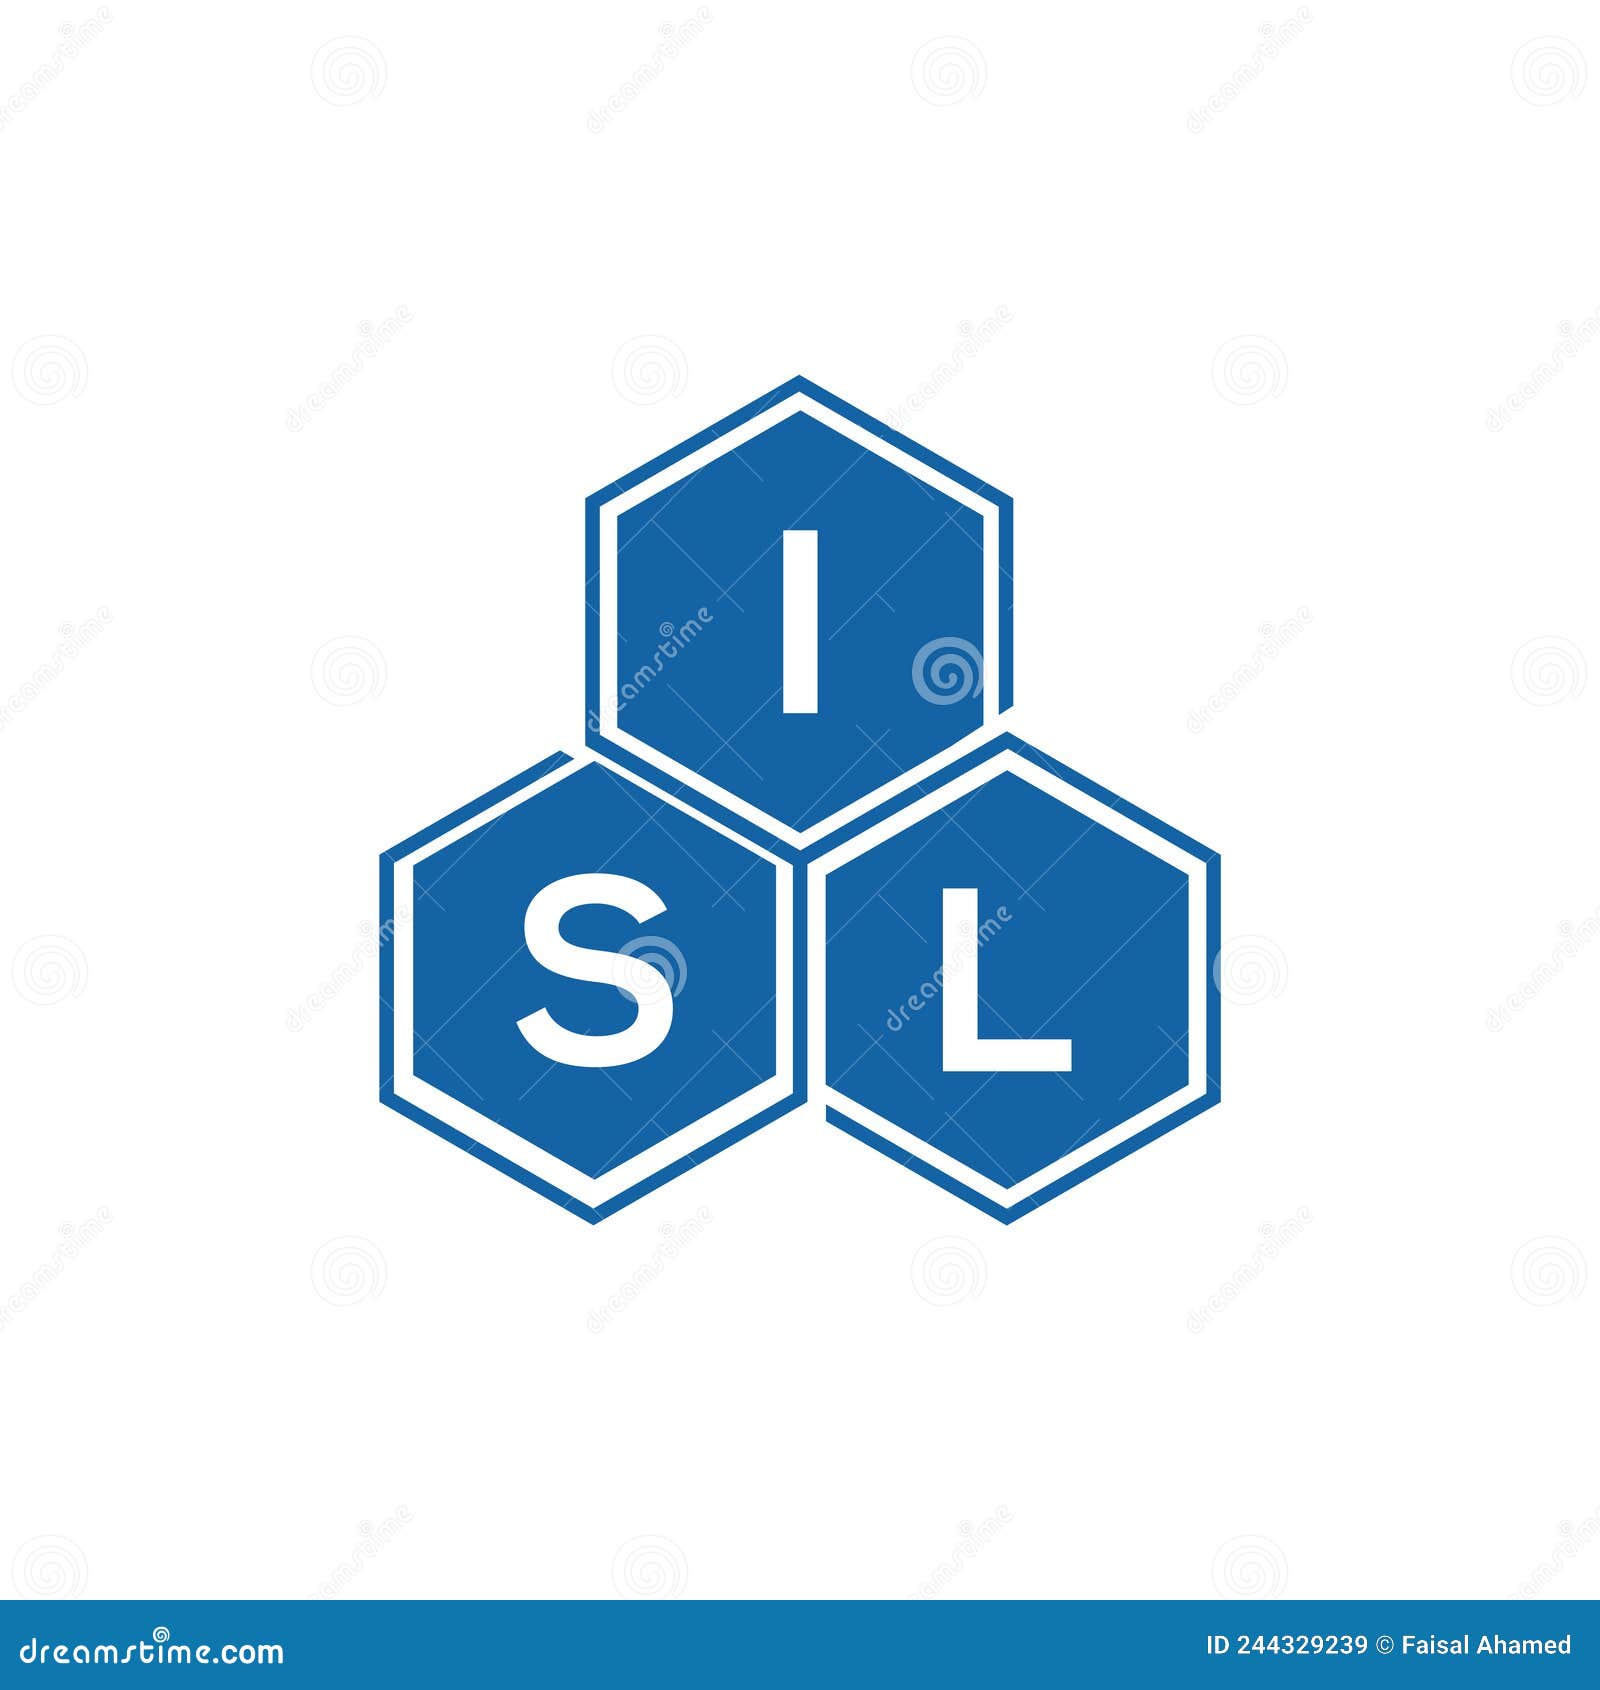 isl letter logo  on white background.isl creative initials letter logo concept.isl  letter 